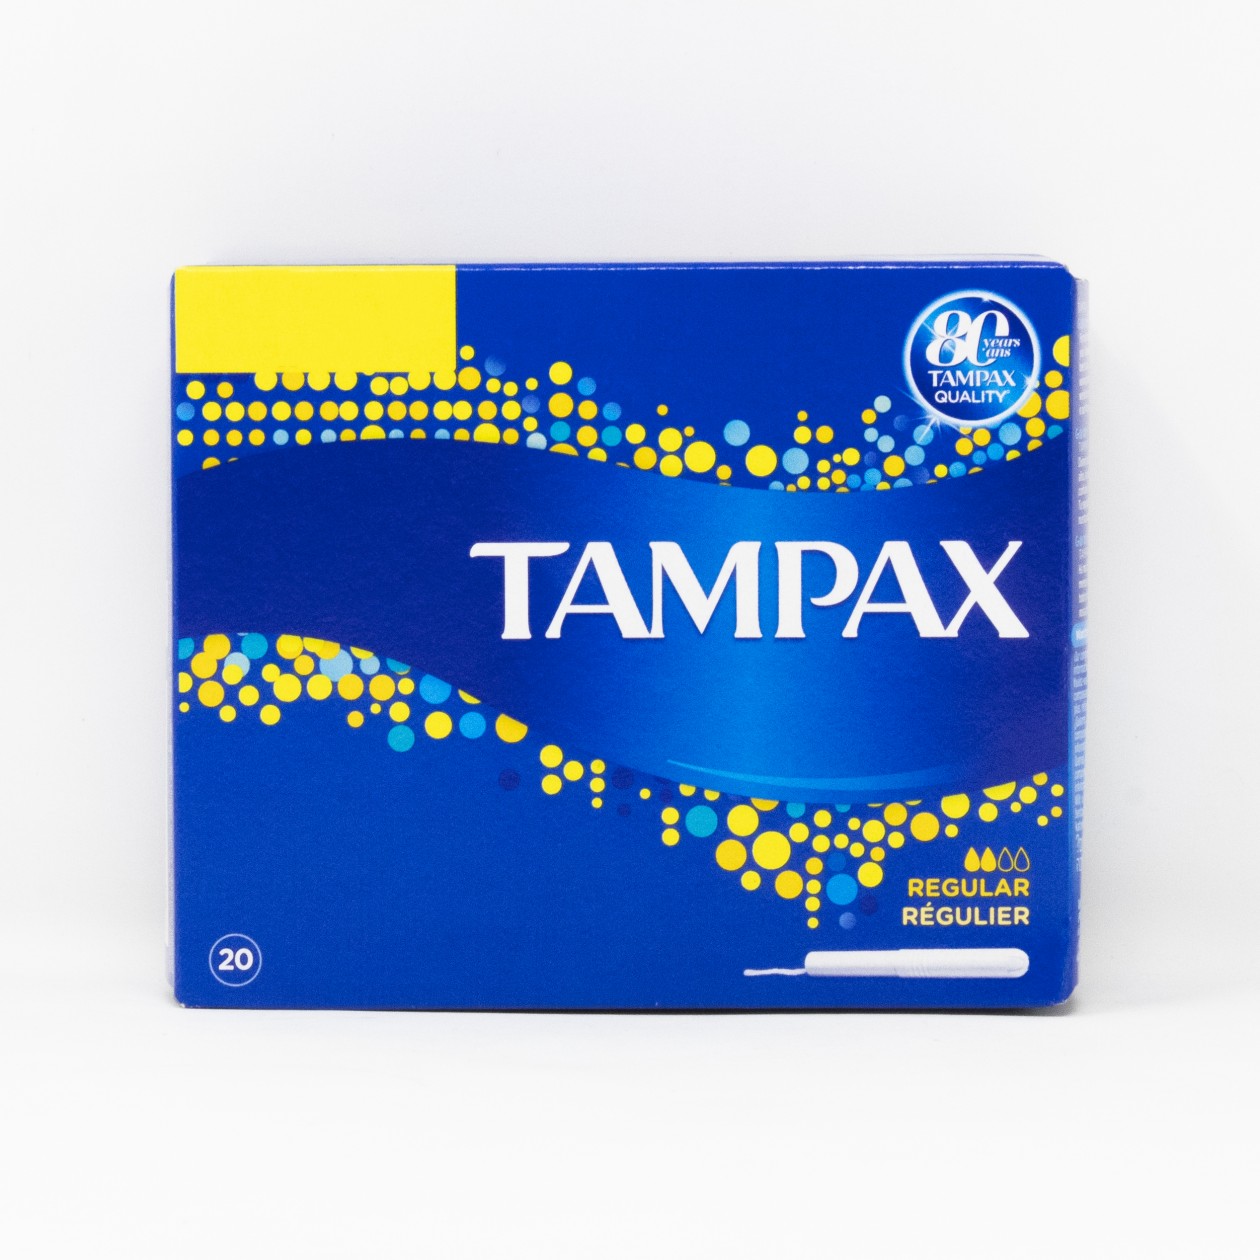 Tampax Regular Applicator Tampons 20s